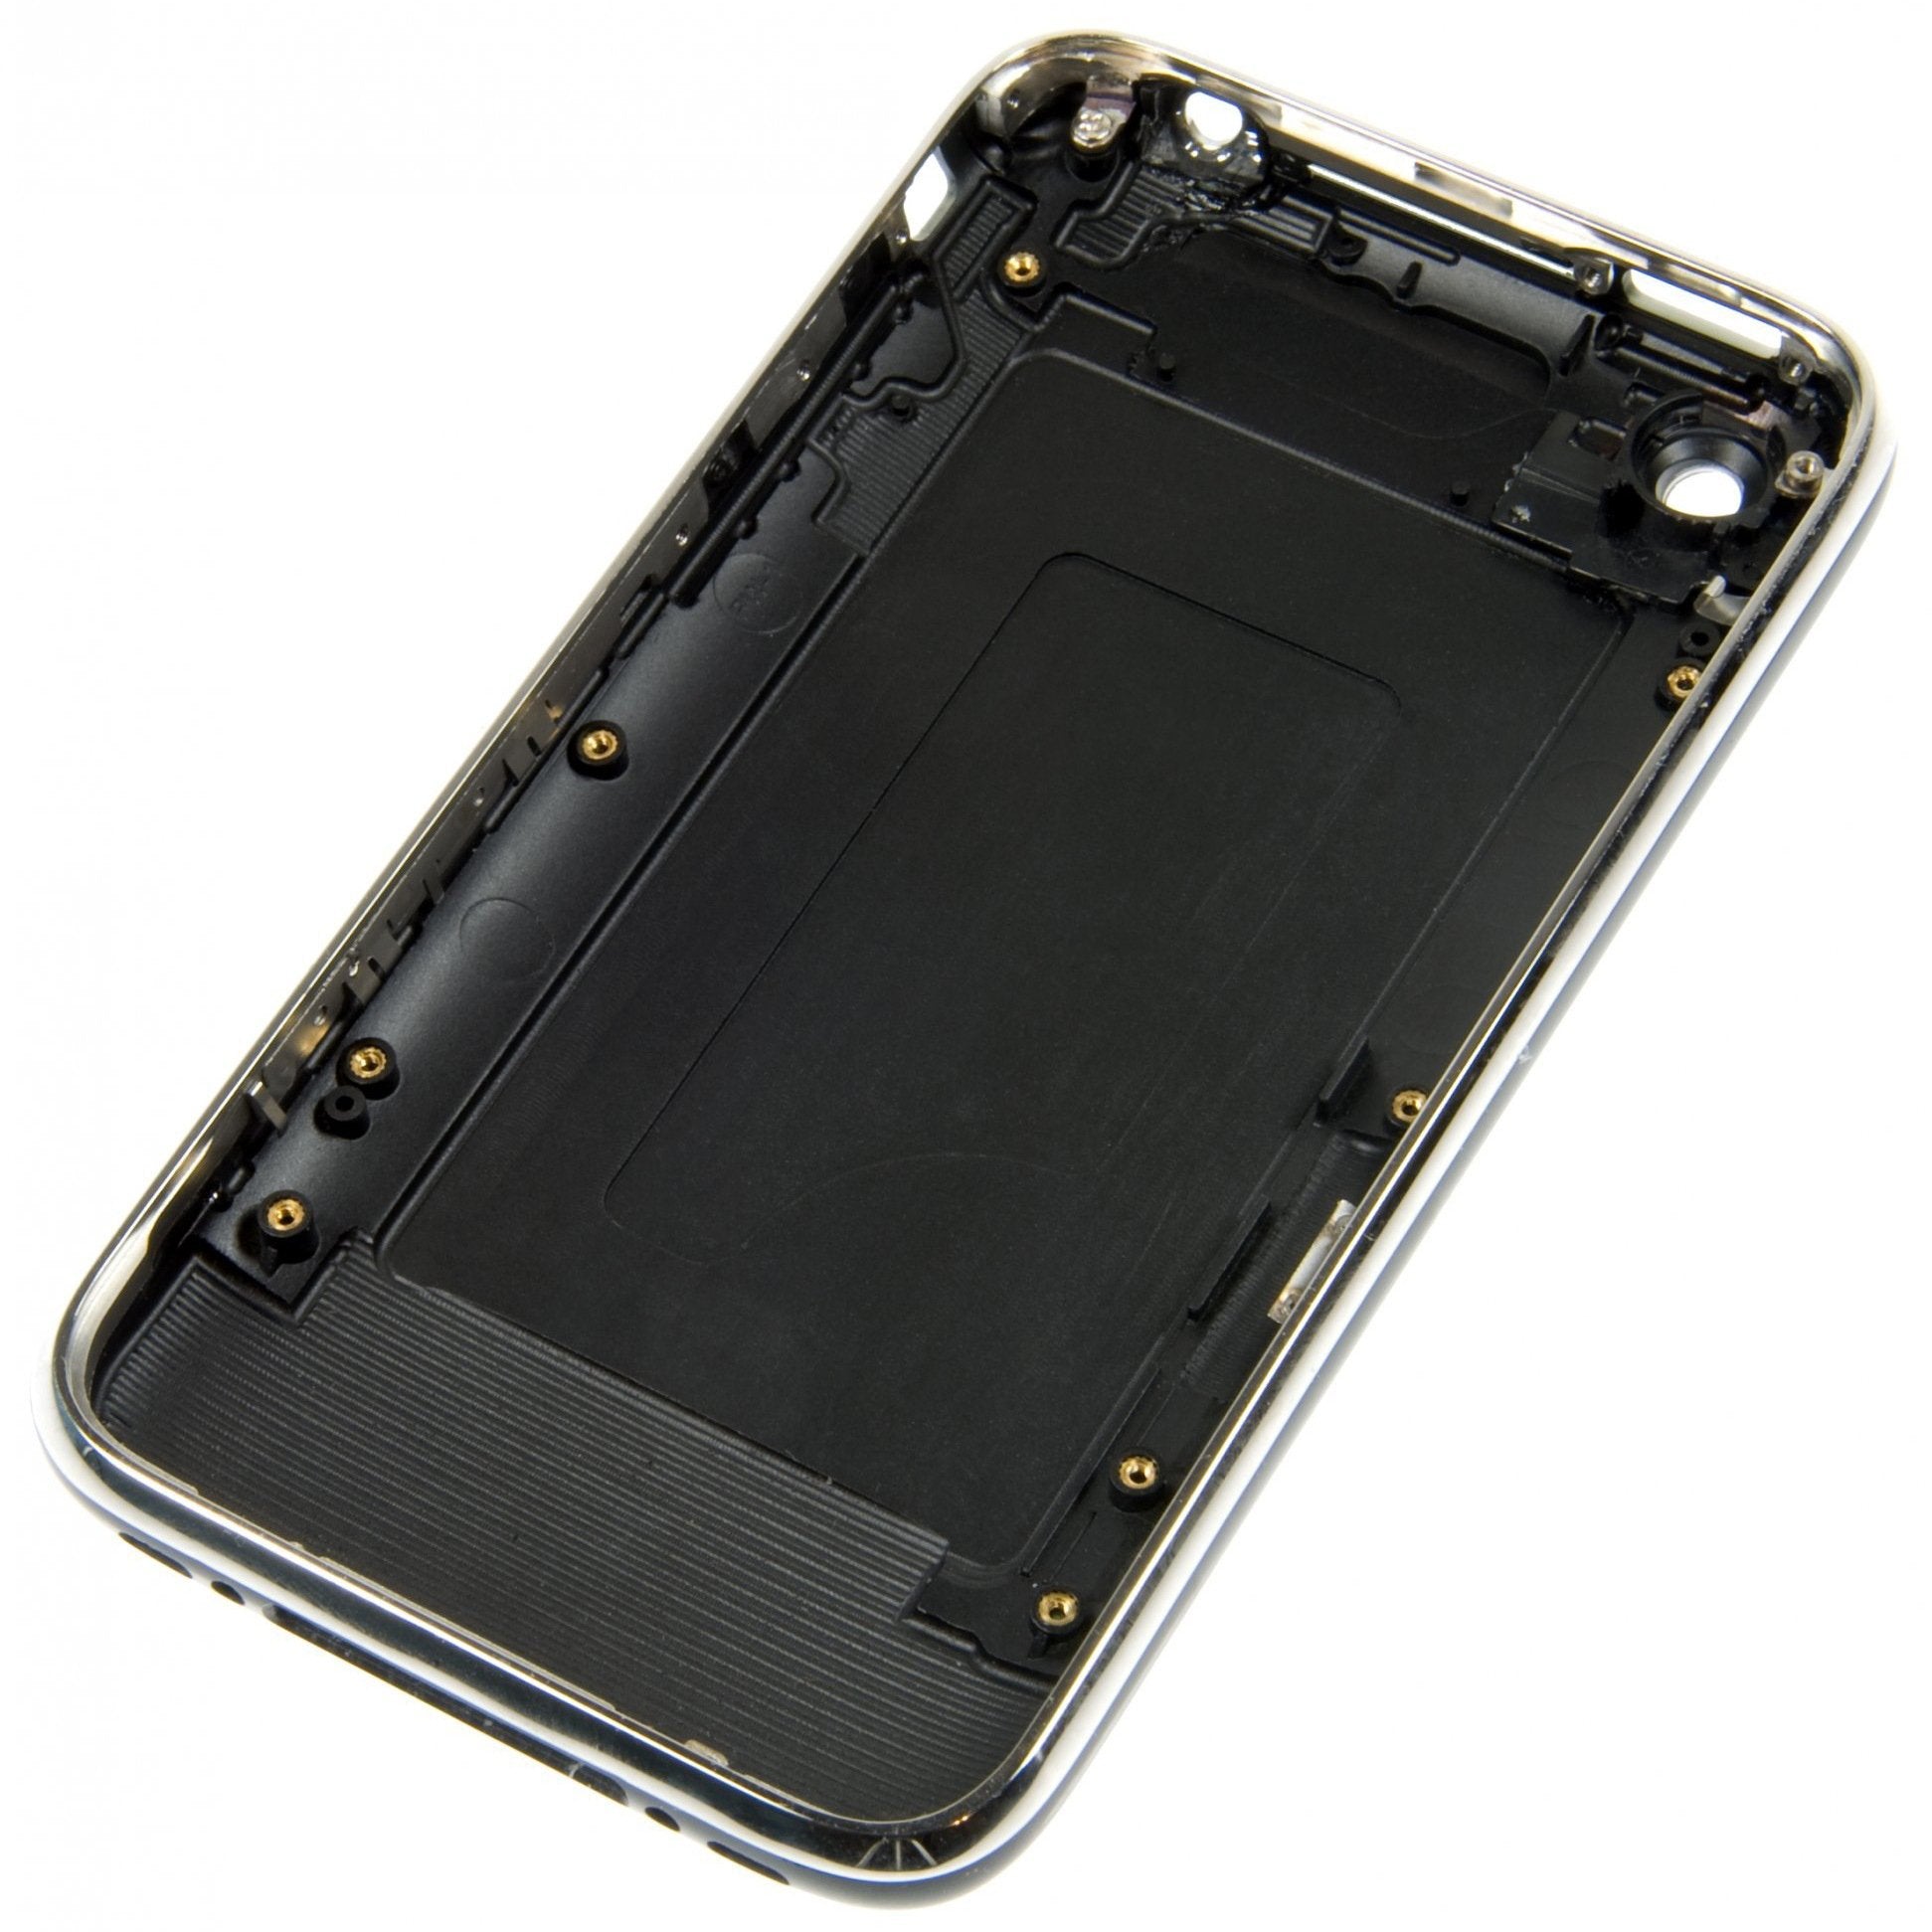 iPhone 3G Rear Case Black New 8GB Capacity Label